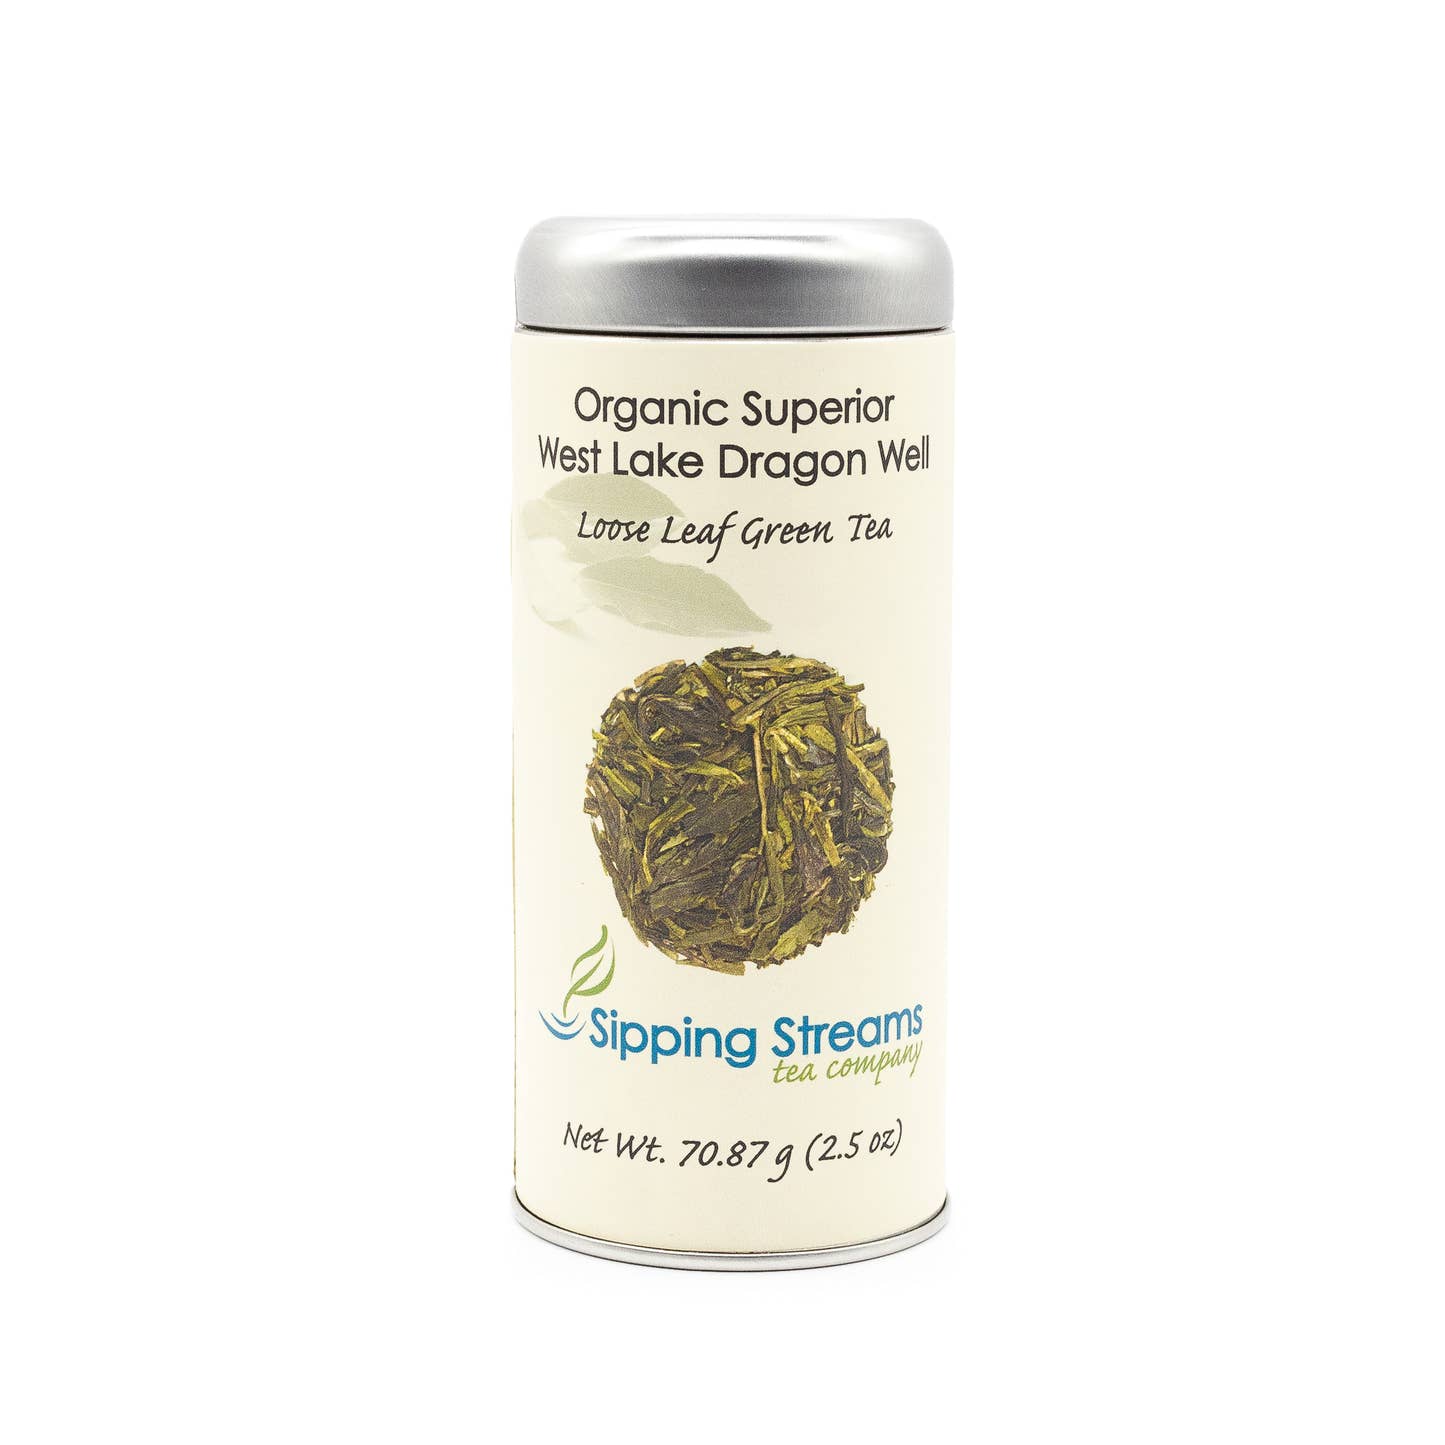 Organic Superior West Lake Dragonwell loose leaf tea tin by Sipping Streams Tea Company